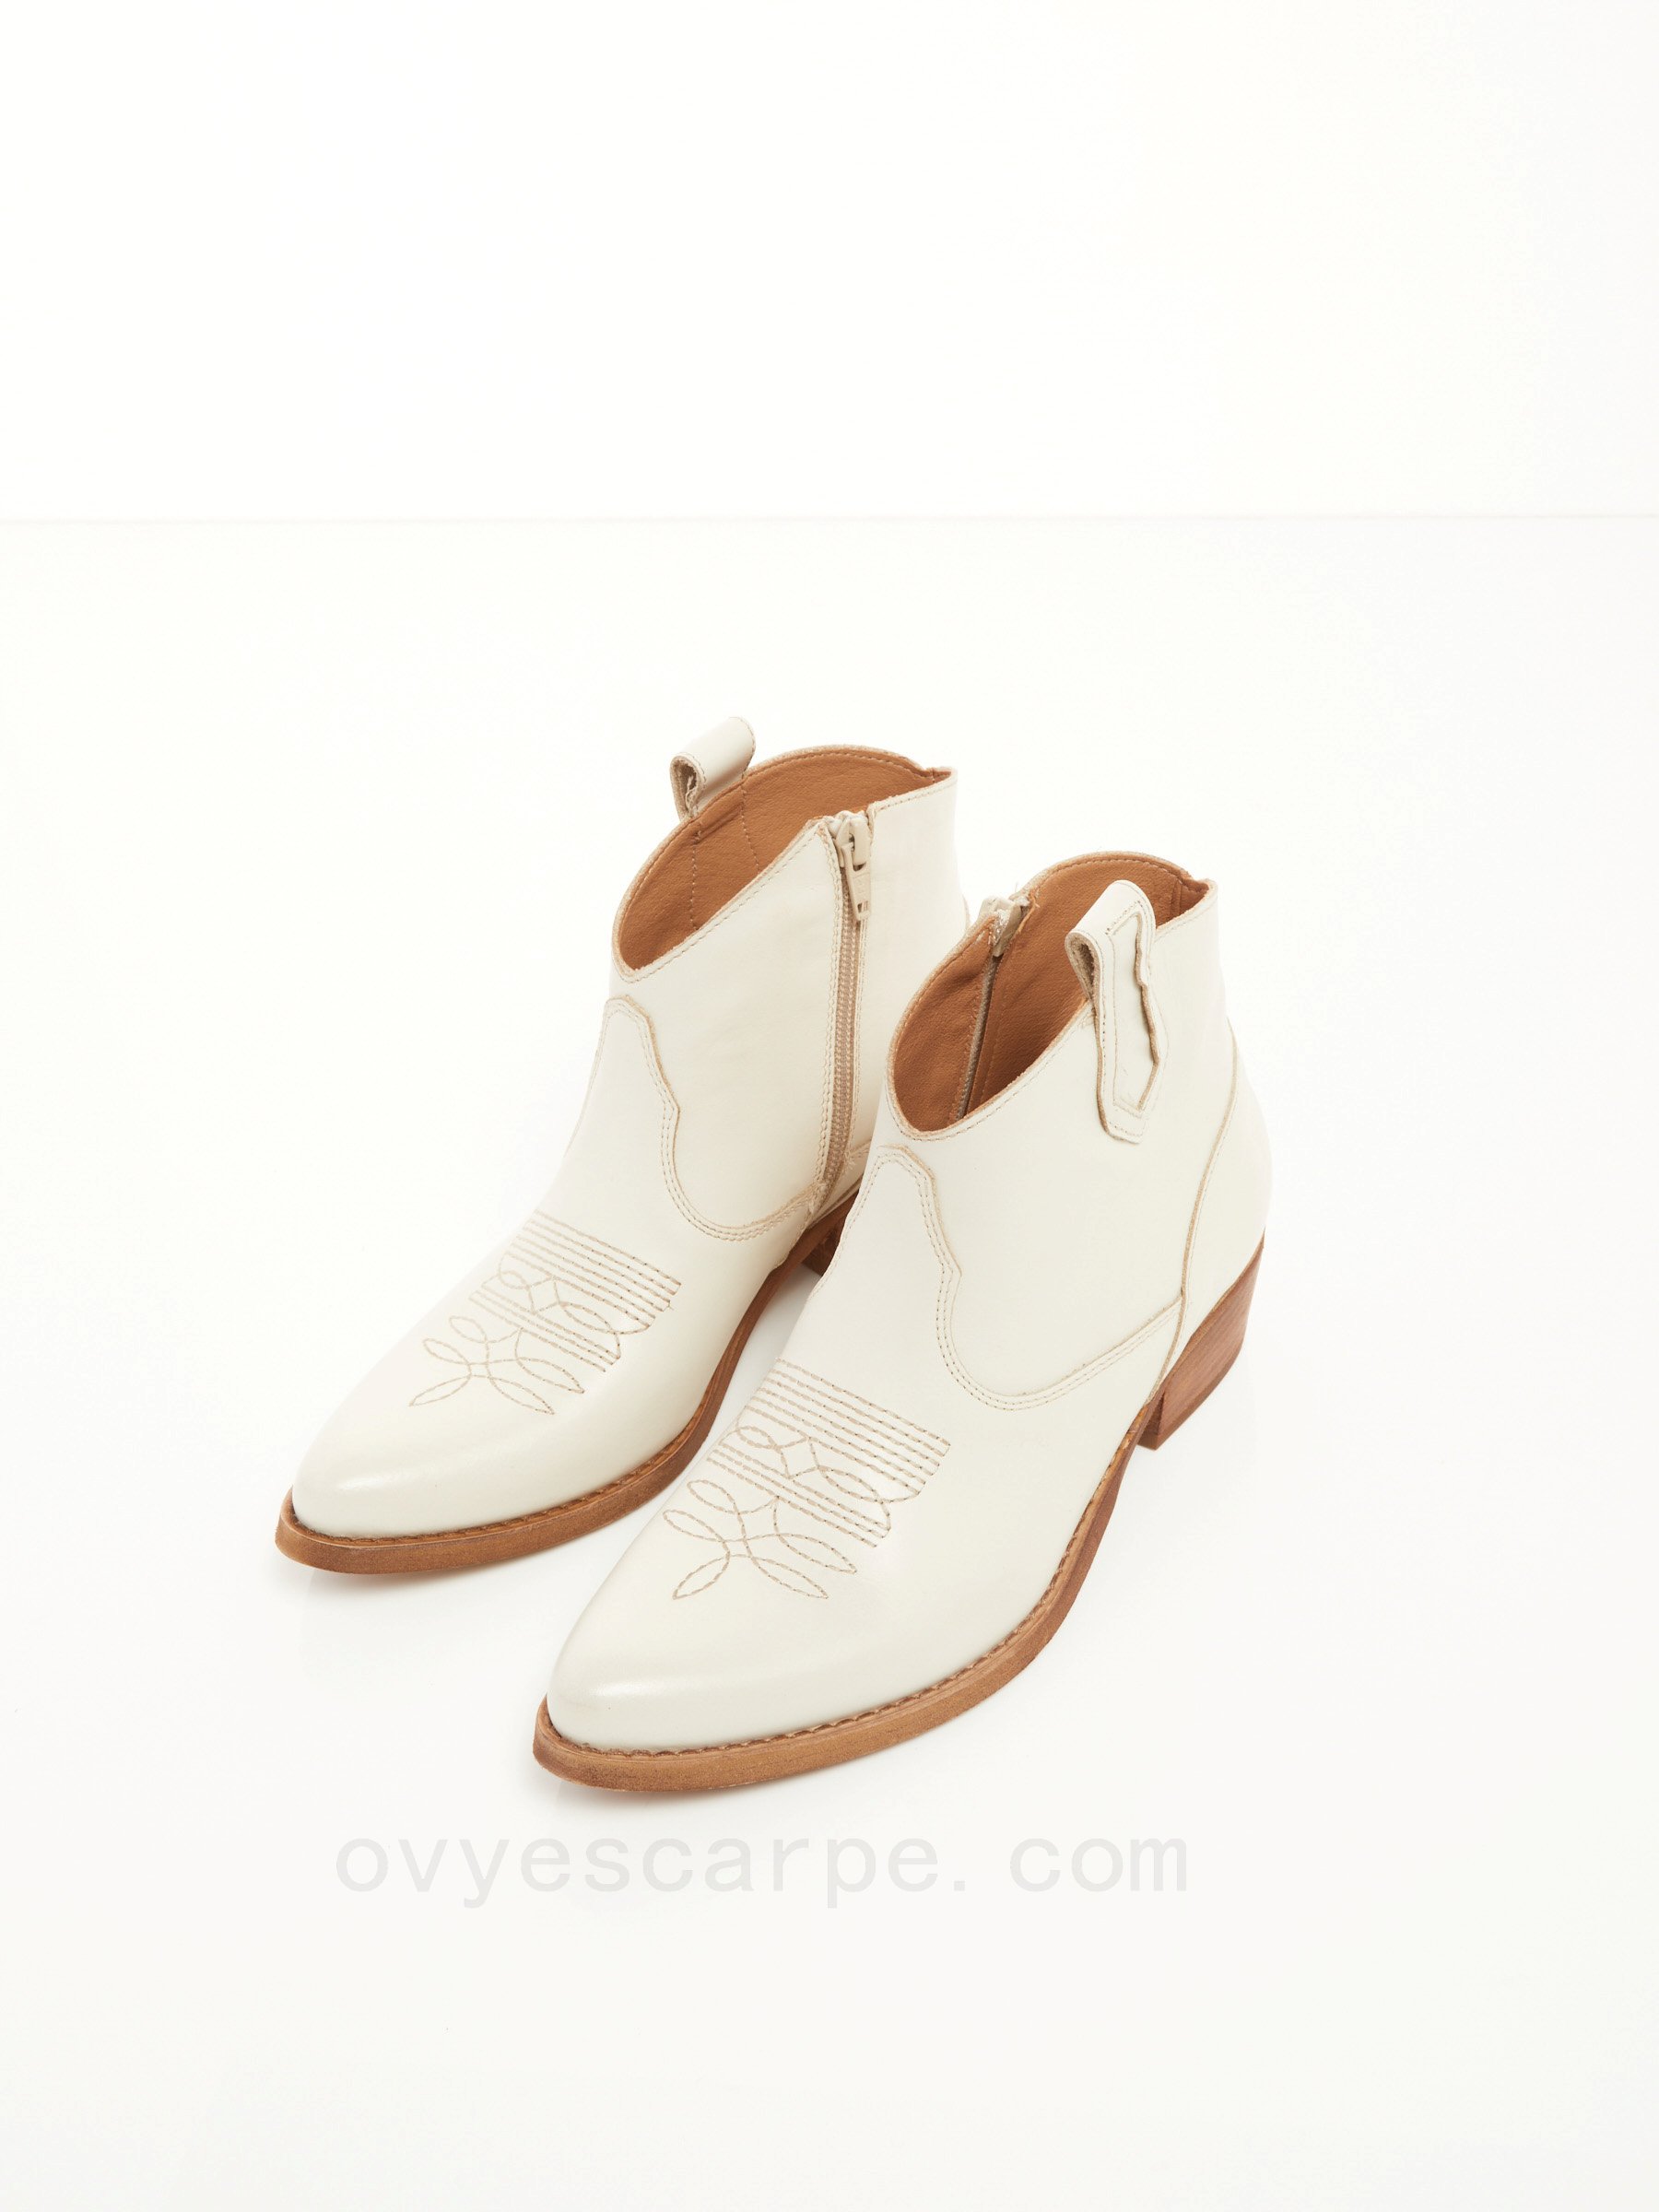 Vendita Leather Cowboy Ankle Boots F08161027-0525 Sconti